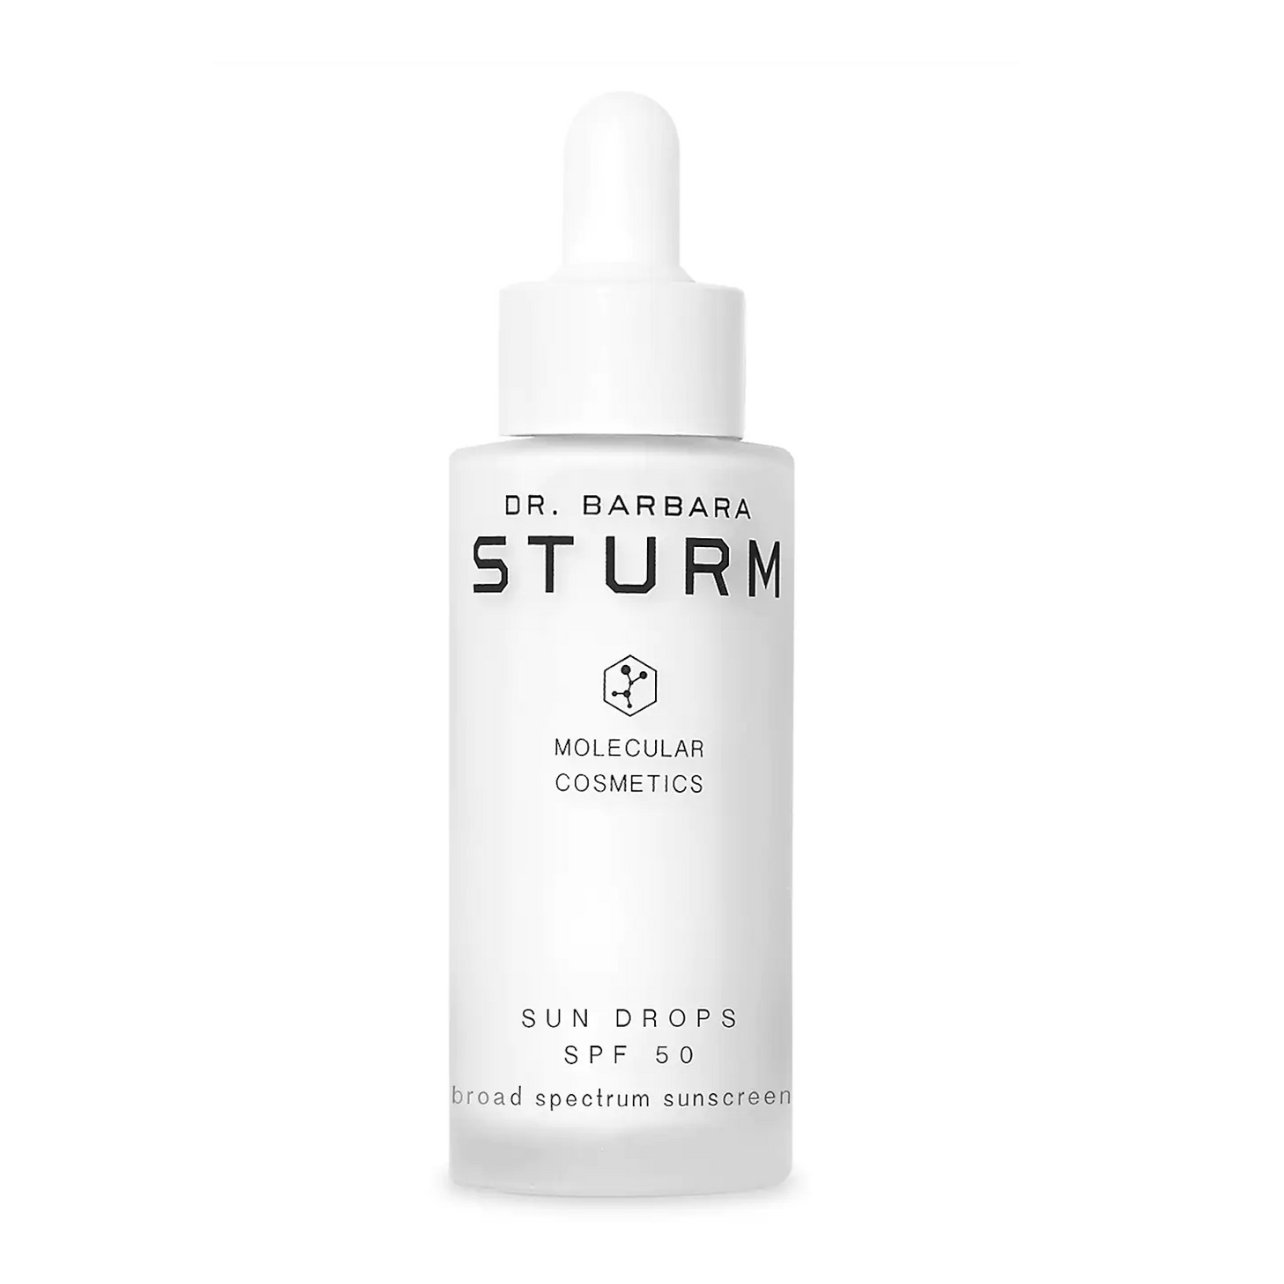 Barbara Strum bottle of sun drops serum